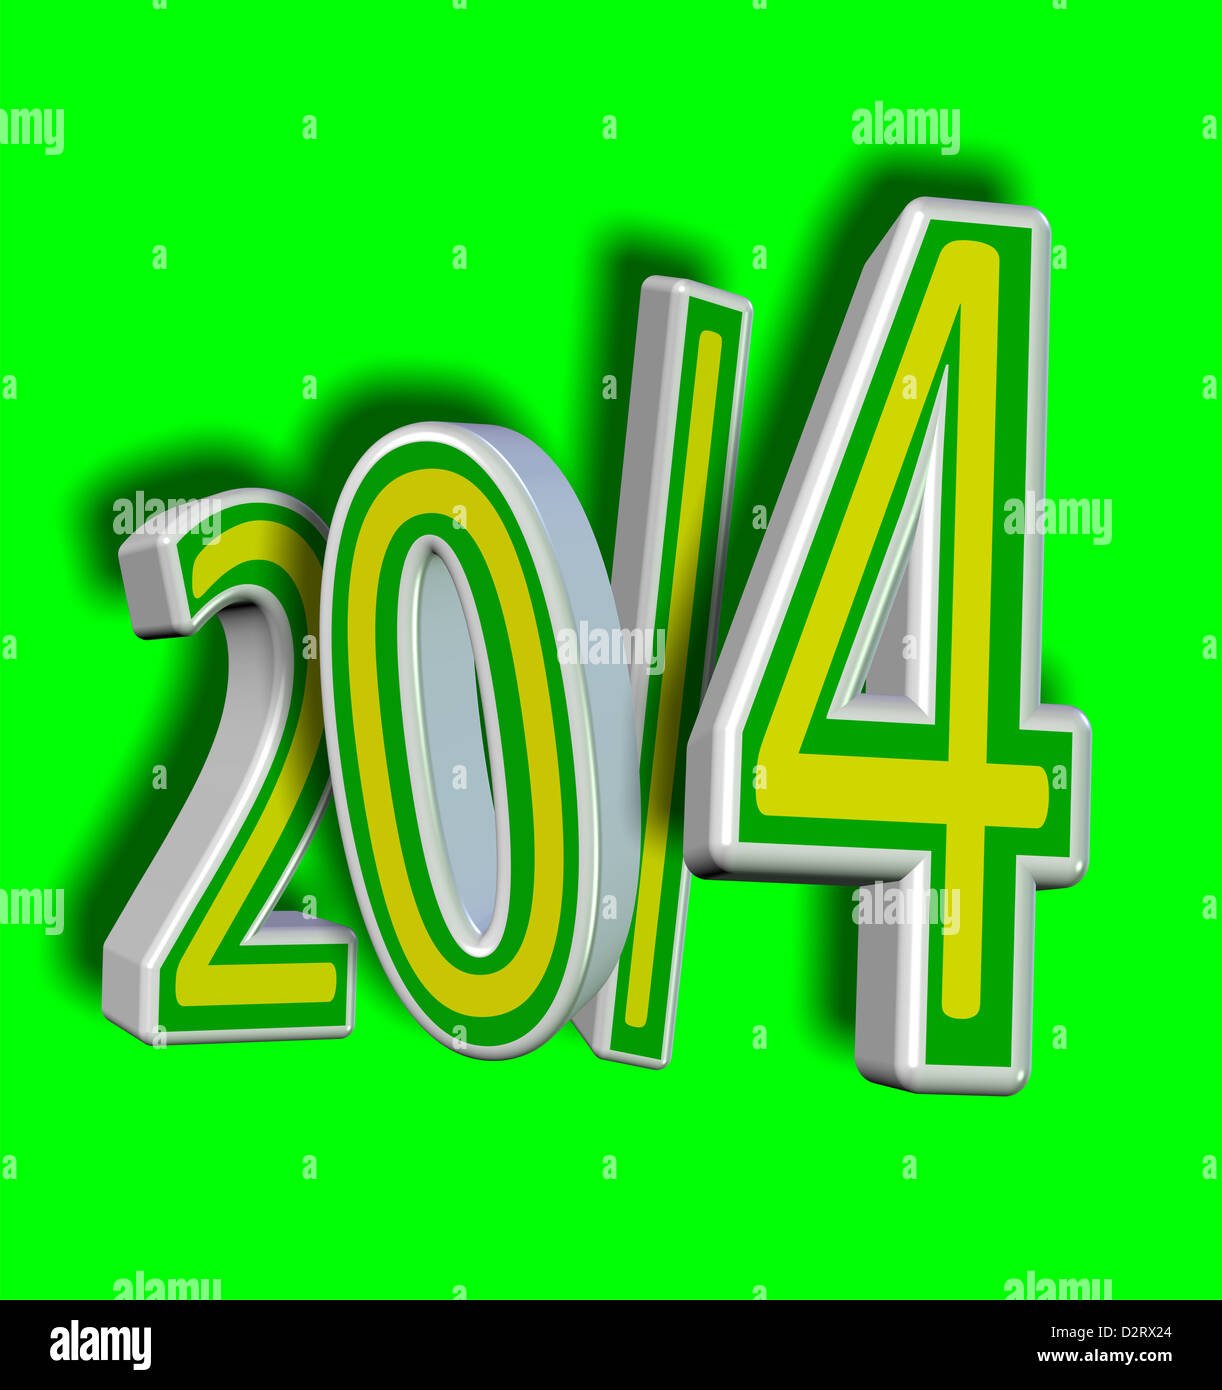 2014 Brazil soccer year! Stock Photo